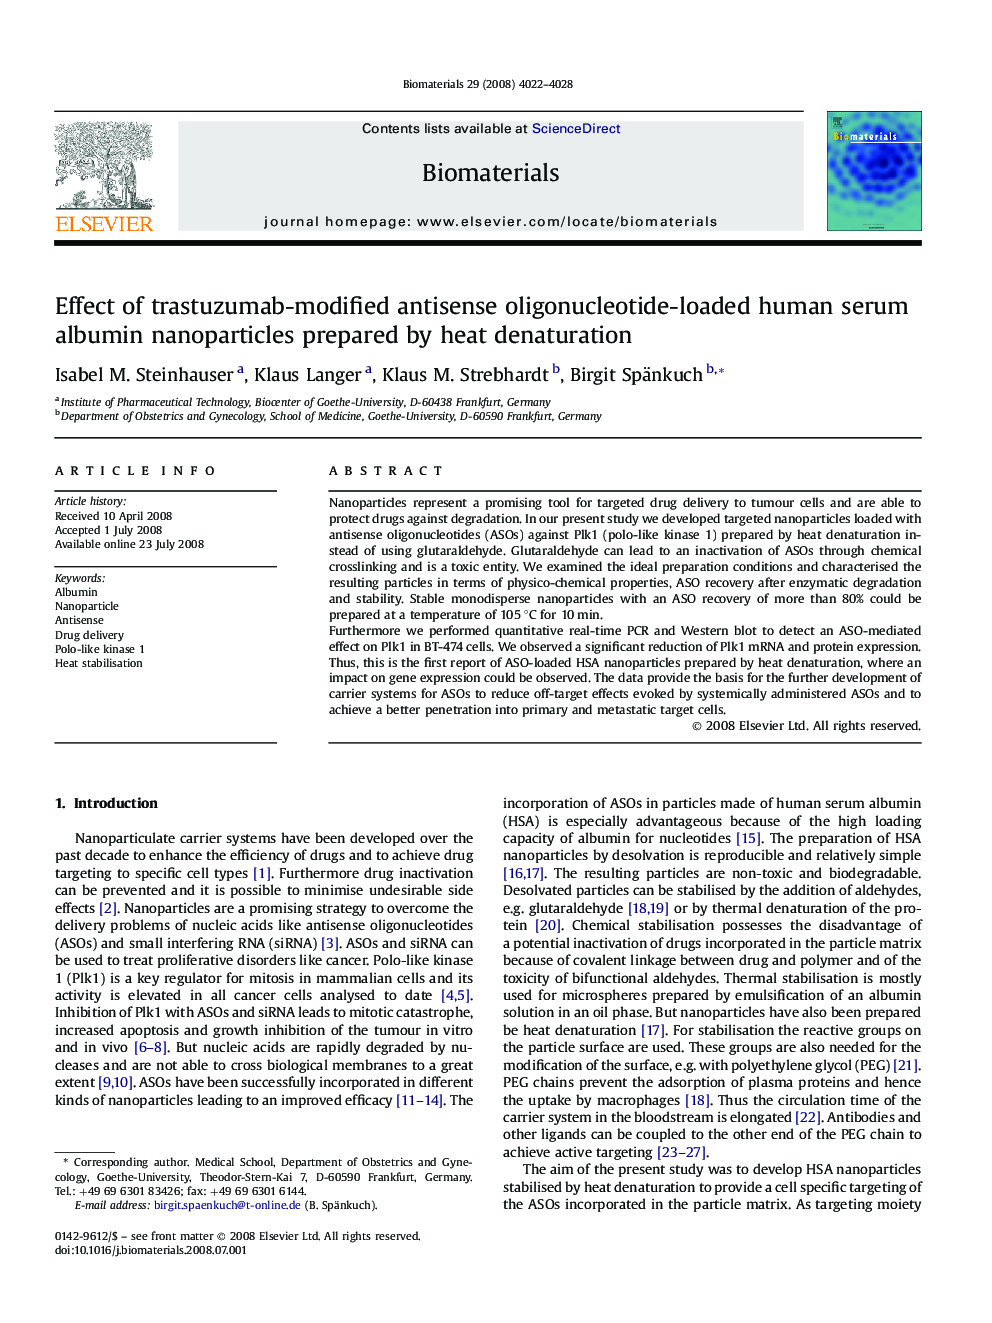 Effect of trastuzumab-modified antisense oligonucleotide-loaded human serum albumin nanoparticles prepared by heat denaturation